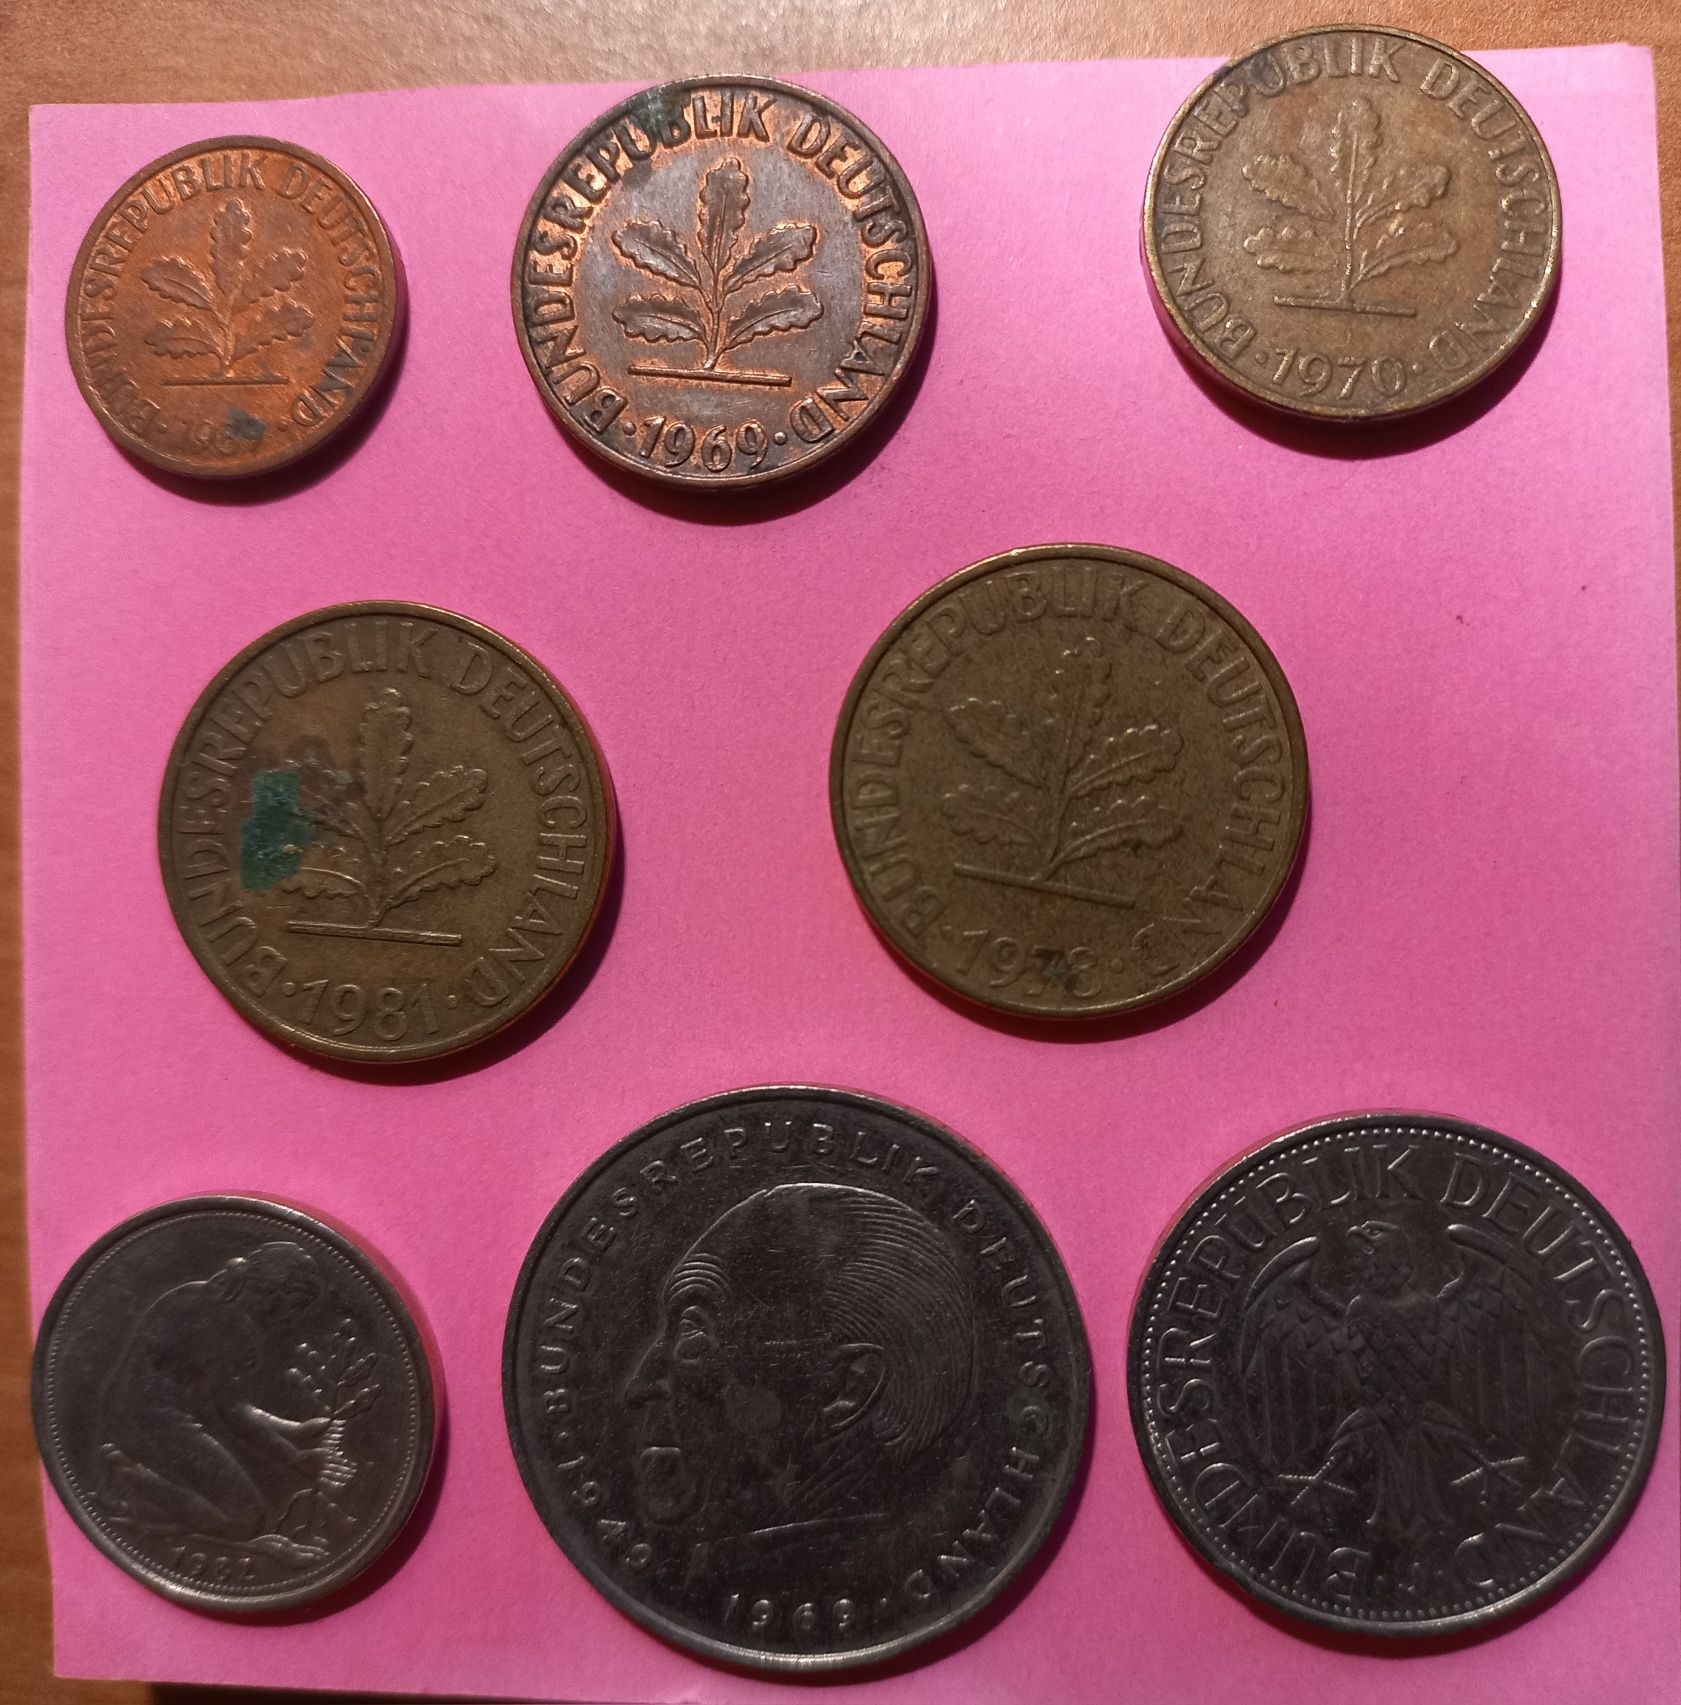 Zestaw monet vintage - dawne RFN